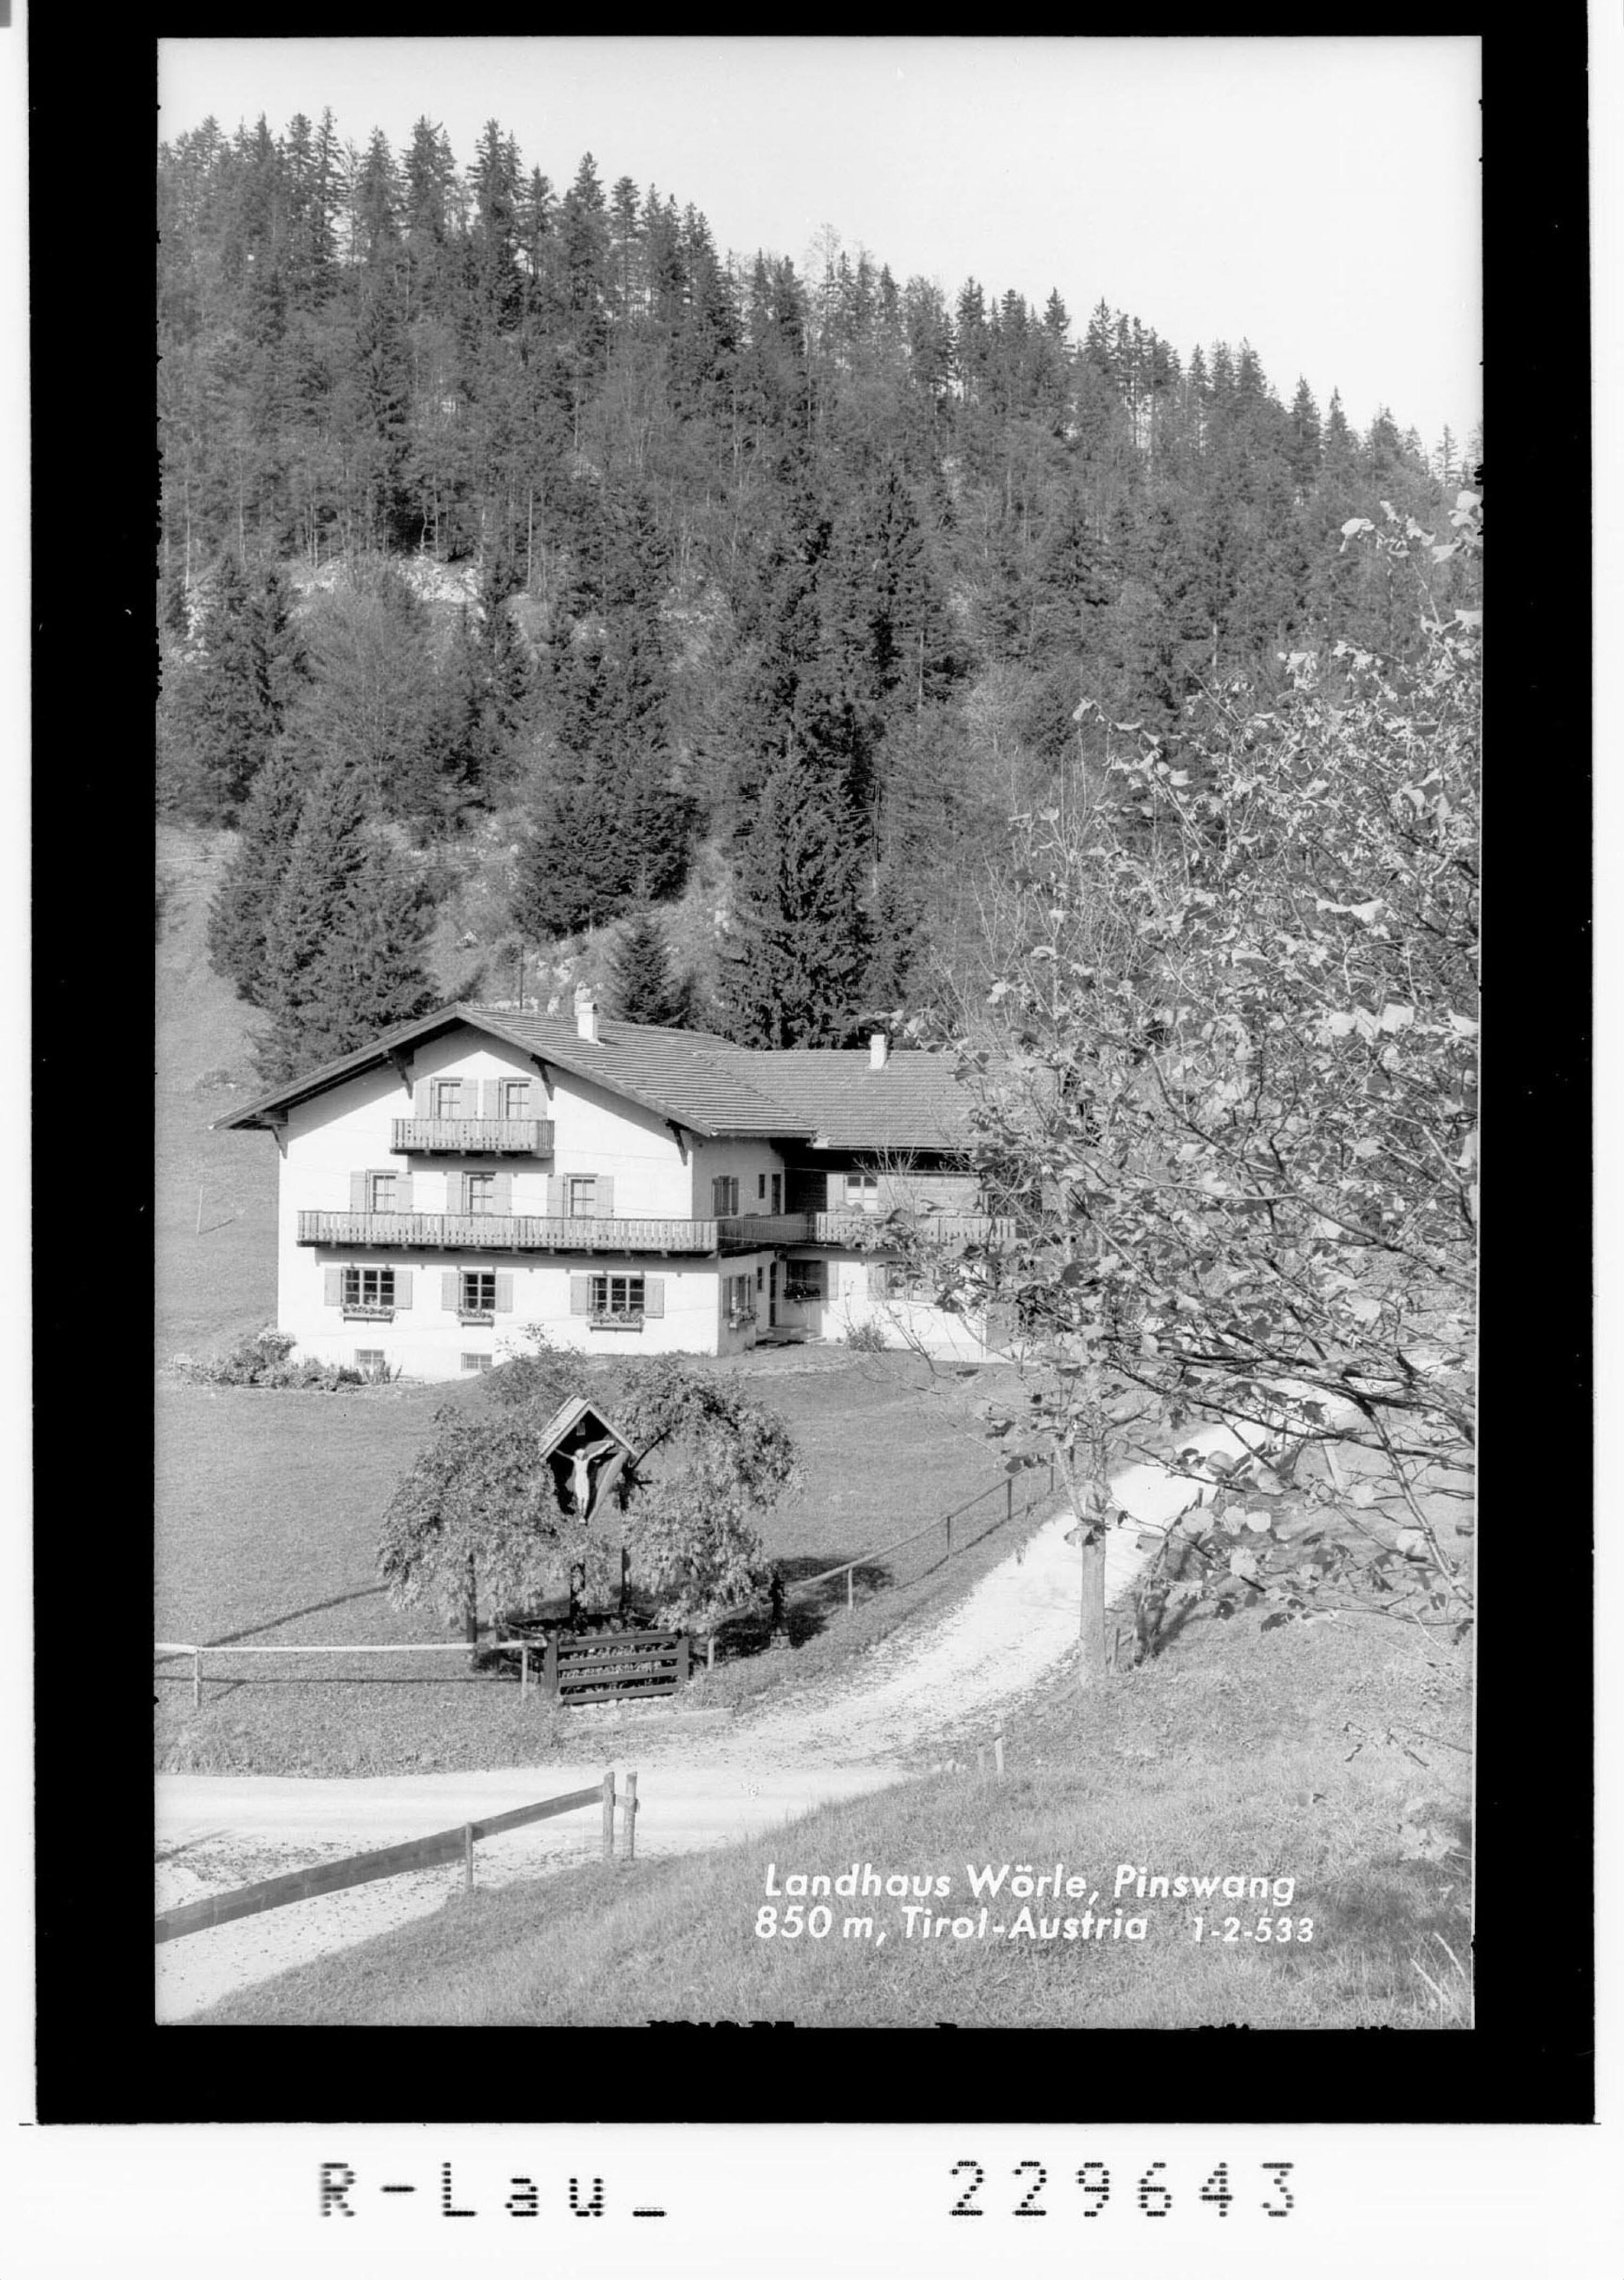 Landhaus Wörle / Pinswang 850 m / Tirol - Austria></div>


    <hr>
    <div class=